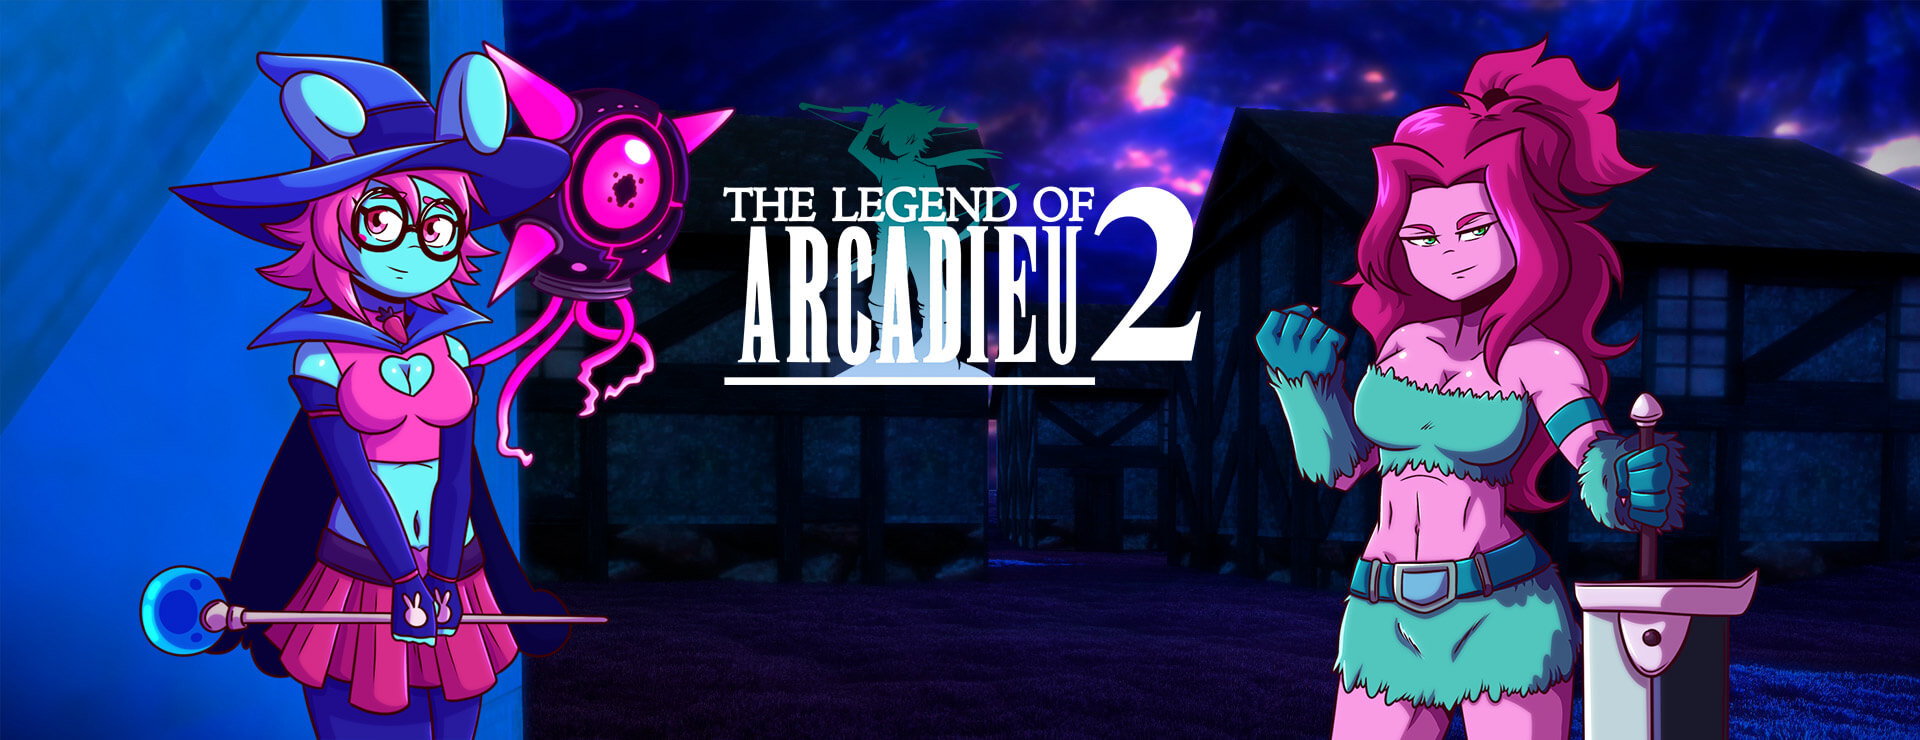 The Legend of Arcadieu 2 - 角色扮演 遊戲